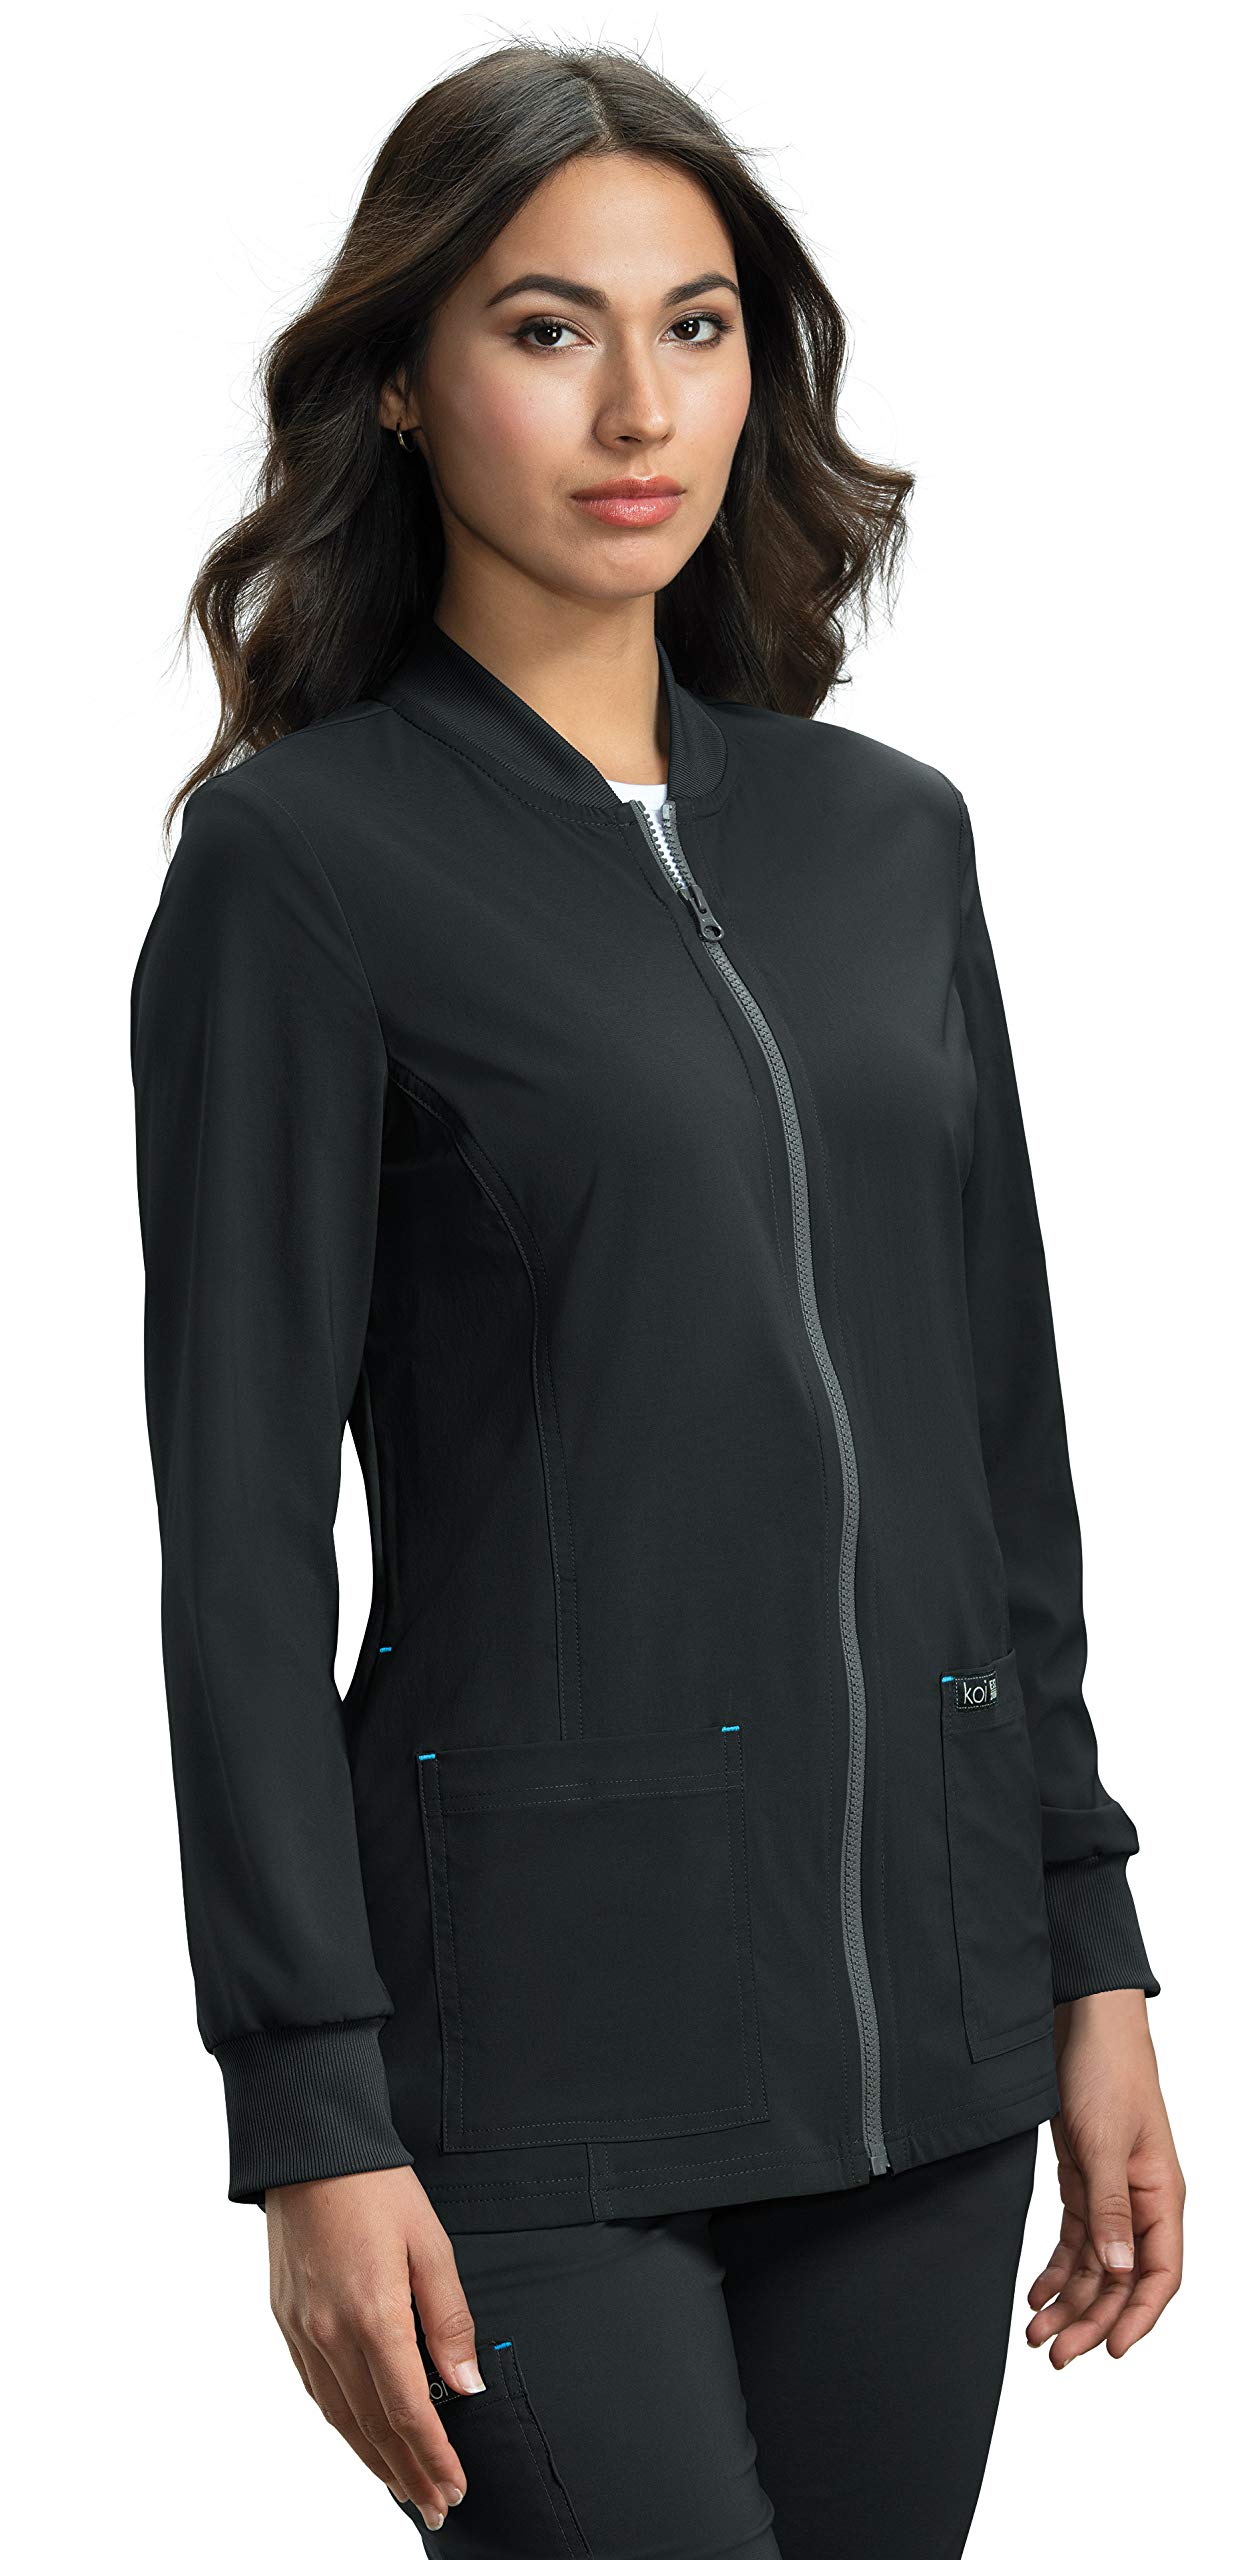 KOI Basics Ultra Comfortable Moisture-Wicking Andrea Scrub Jacket for Women